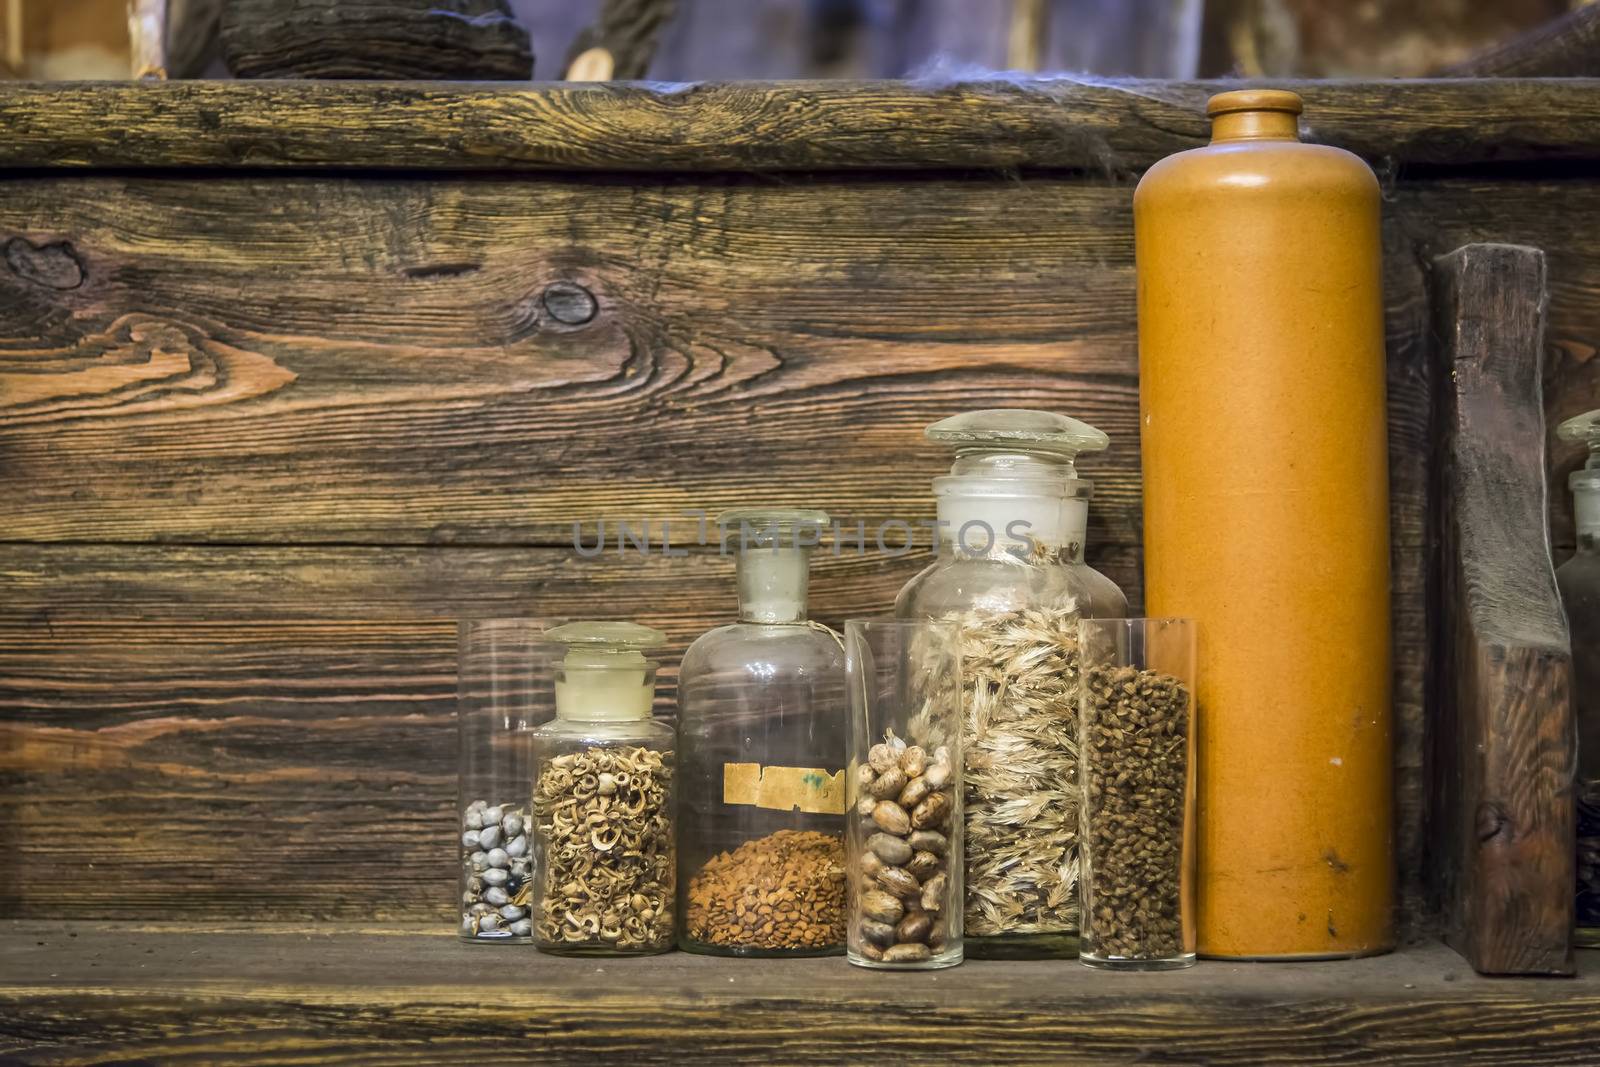 Magic potion ingredients, pharmacy museum in Wroclaw, Poland by furzyk73